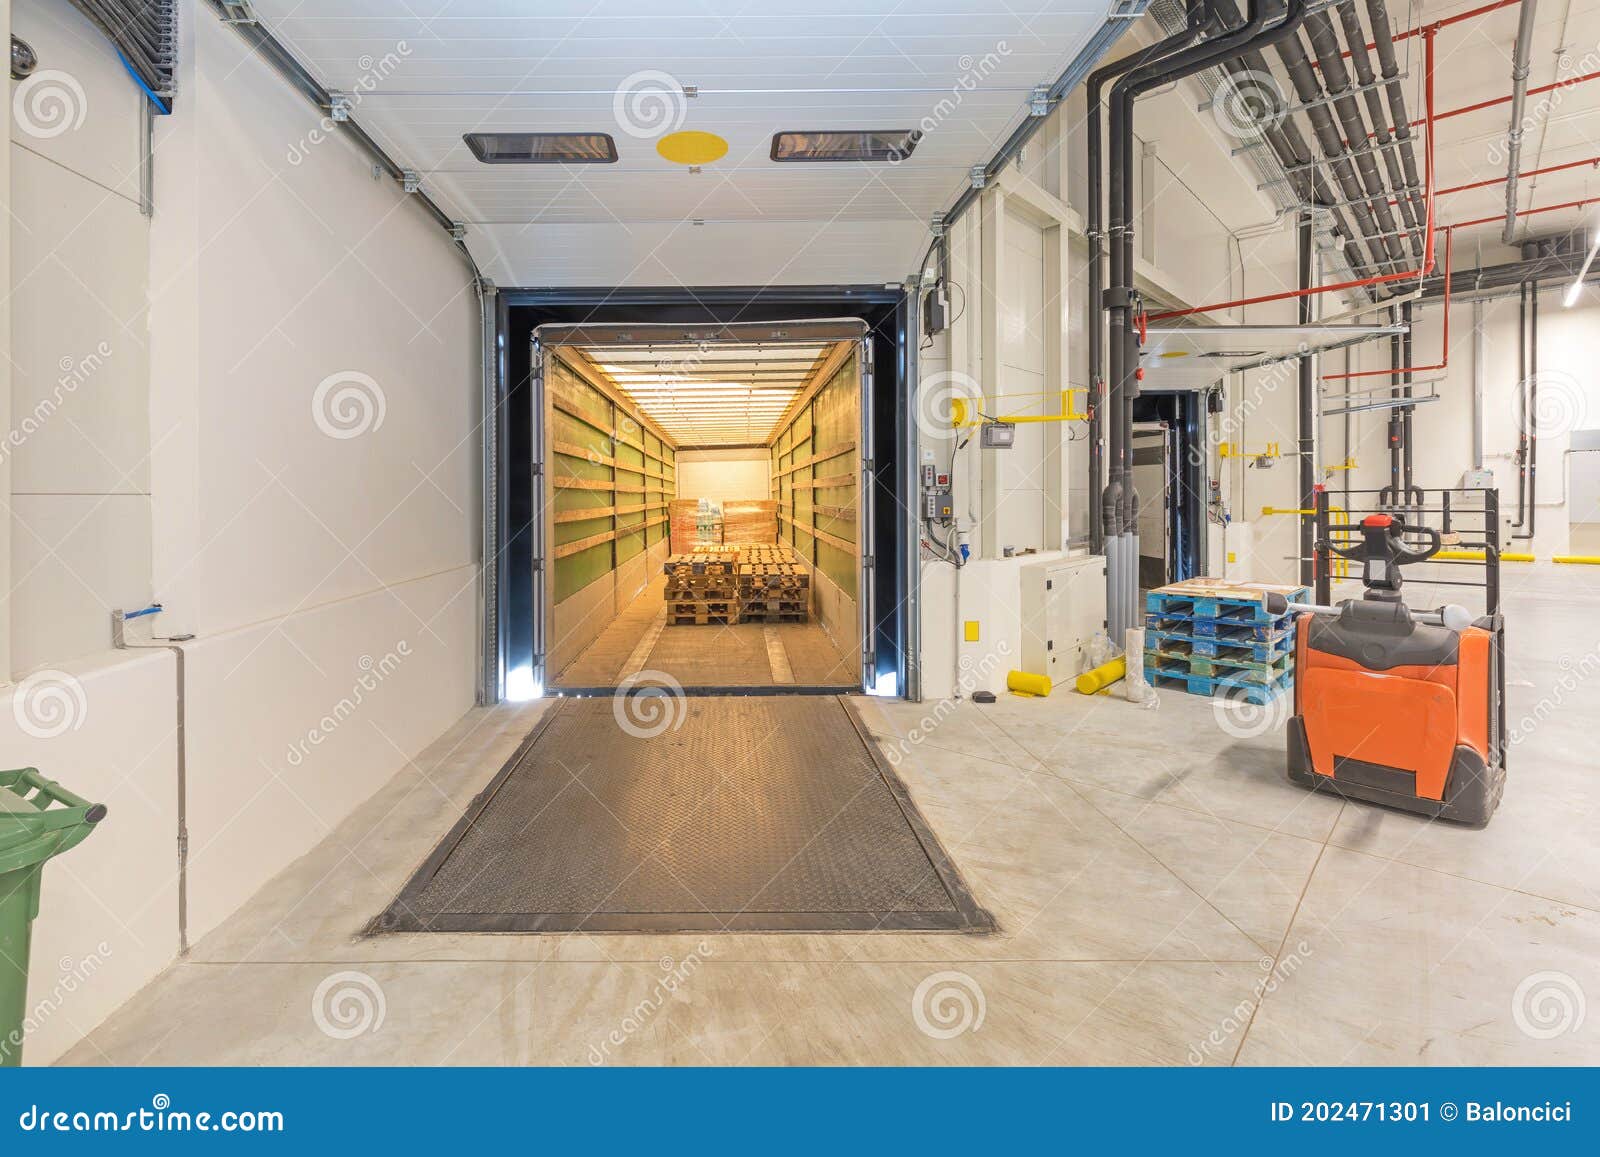 trailer loading bay